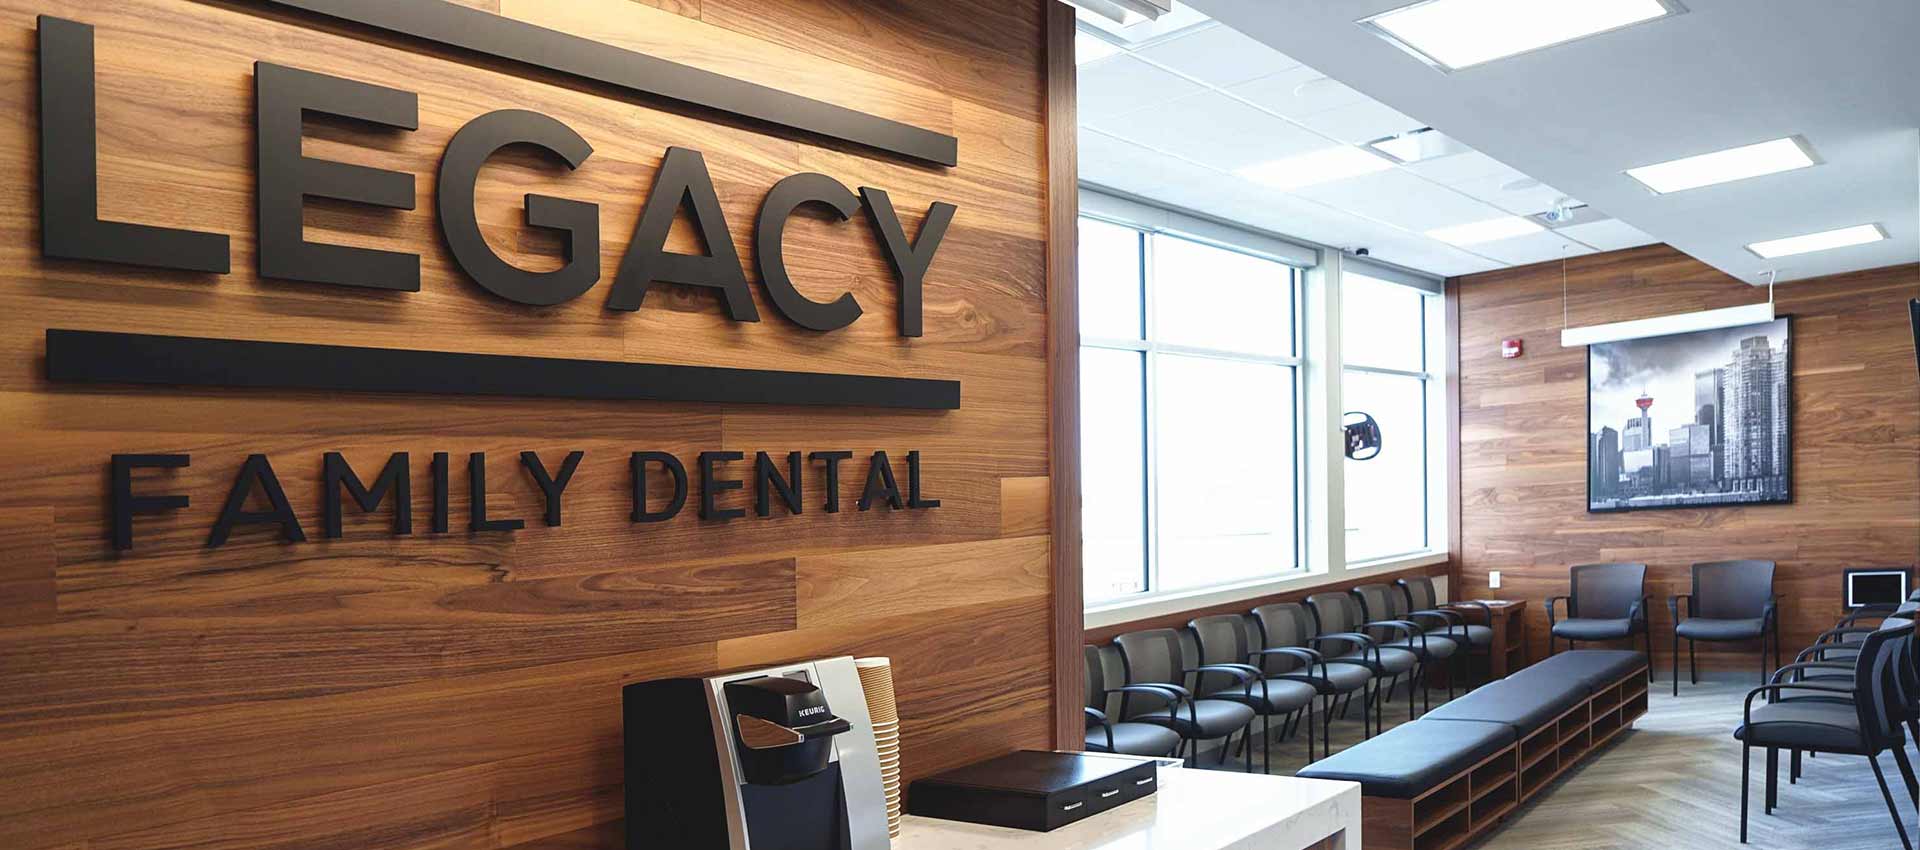 Legacy Family Dental Waiting Area